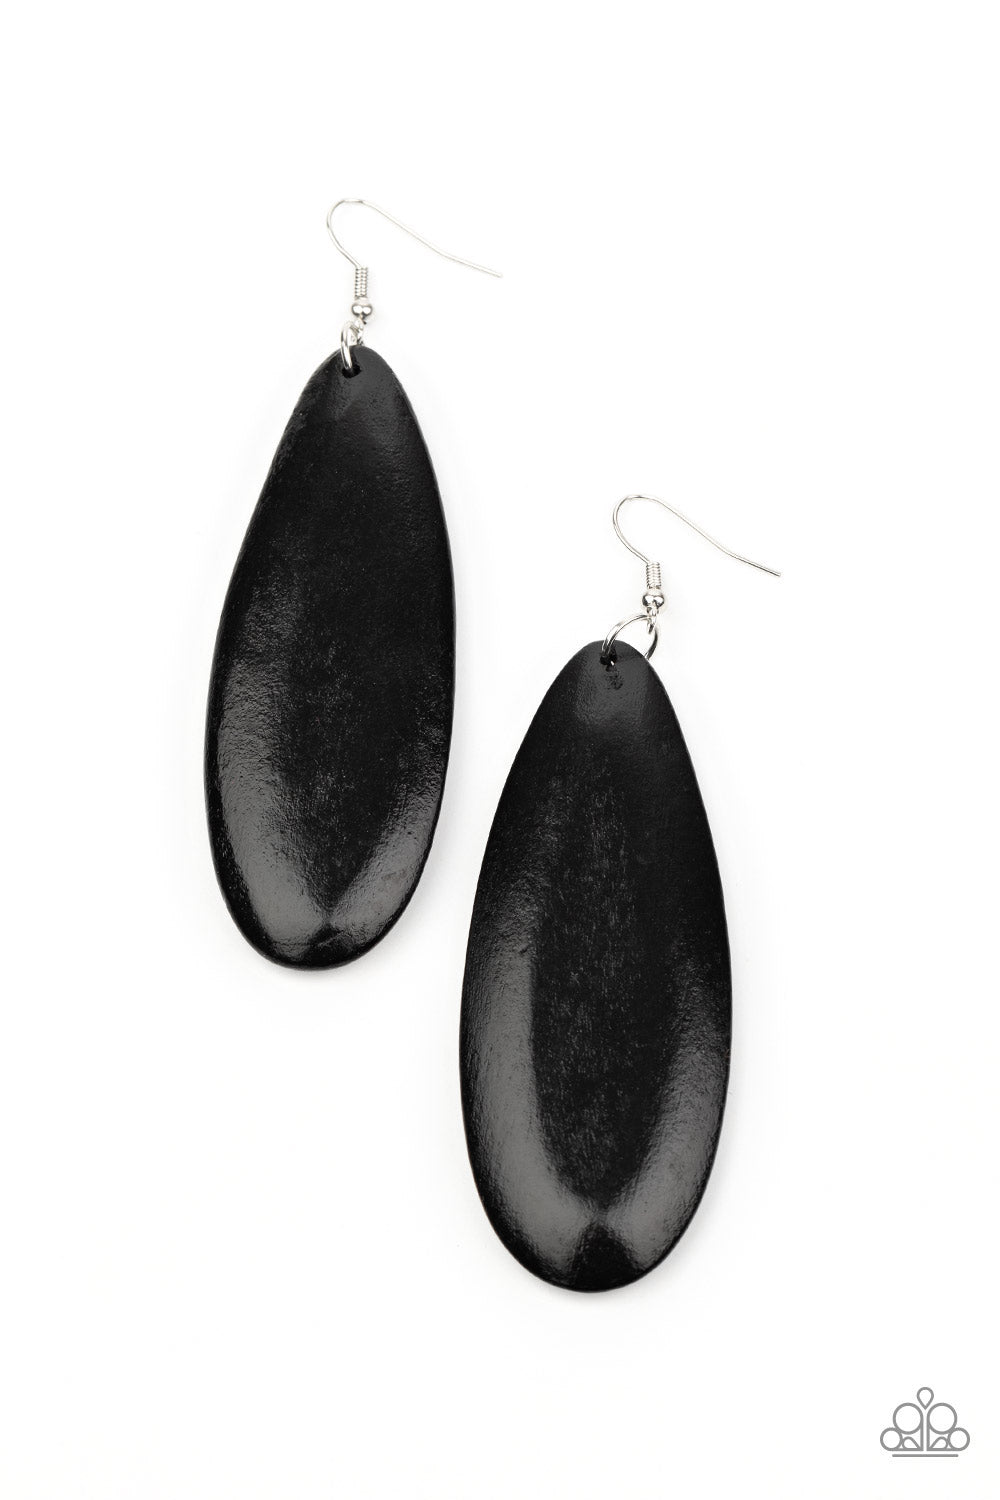 Tropical Ferry - Black wood earrings